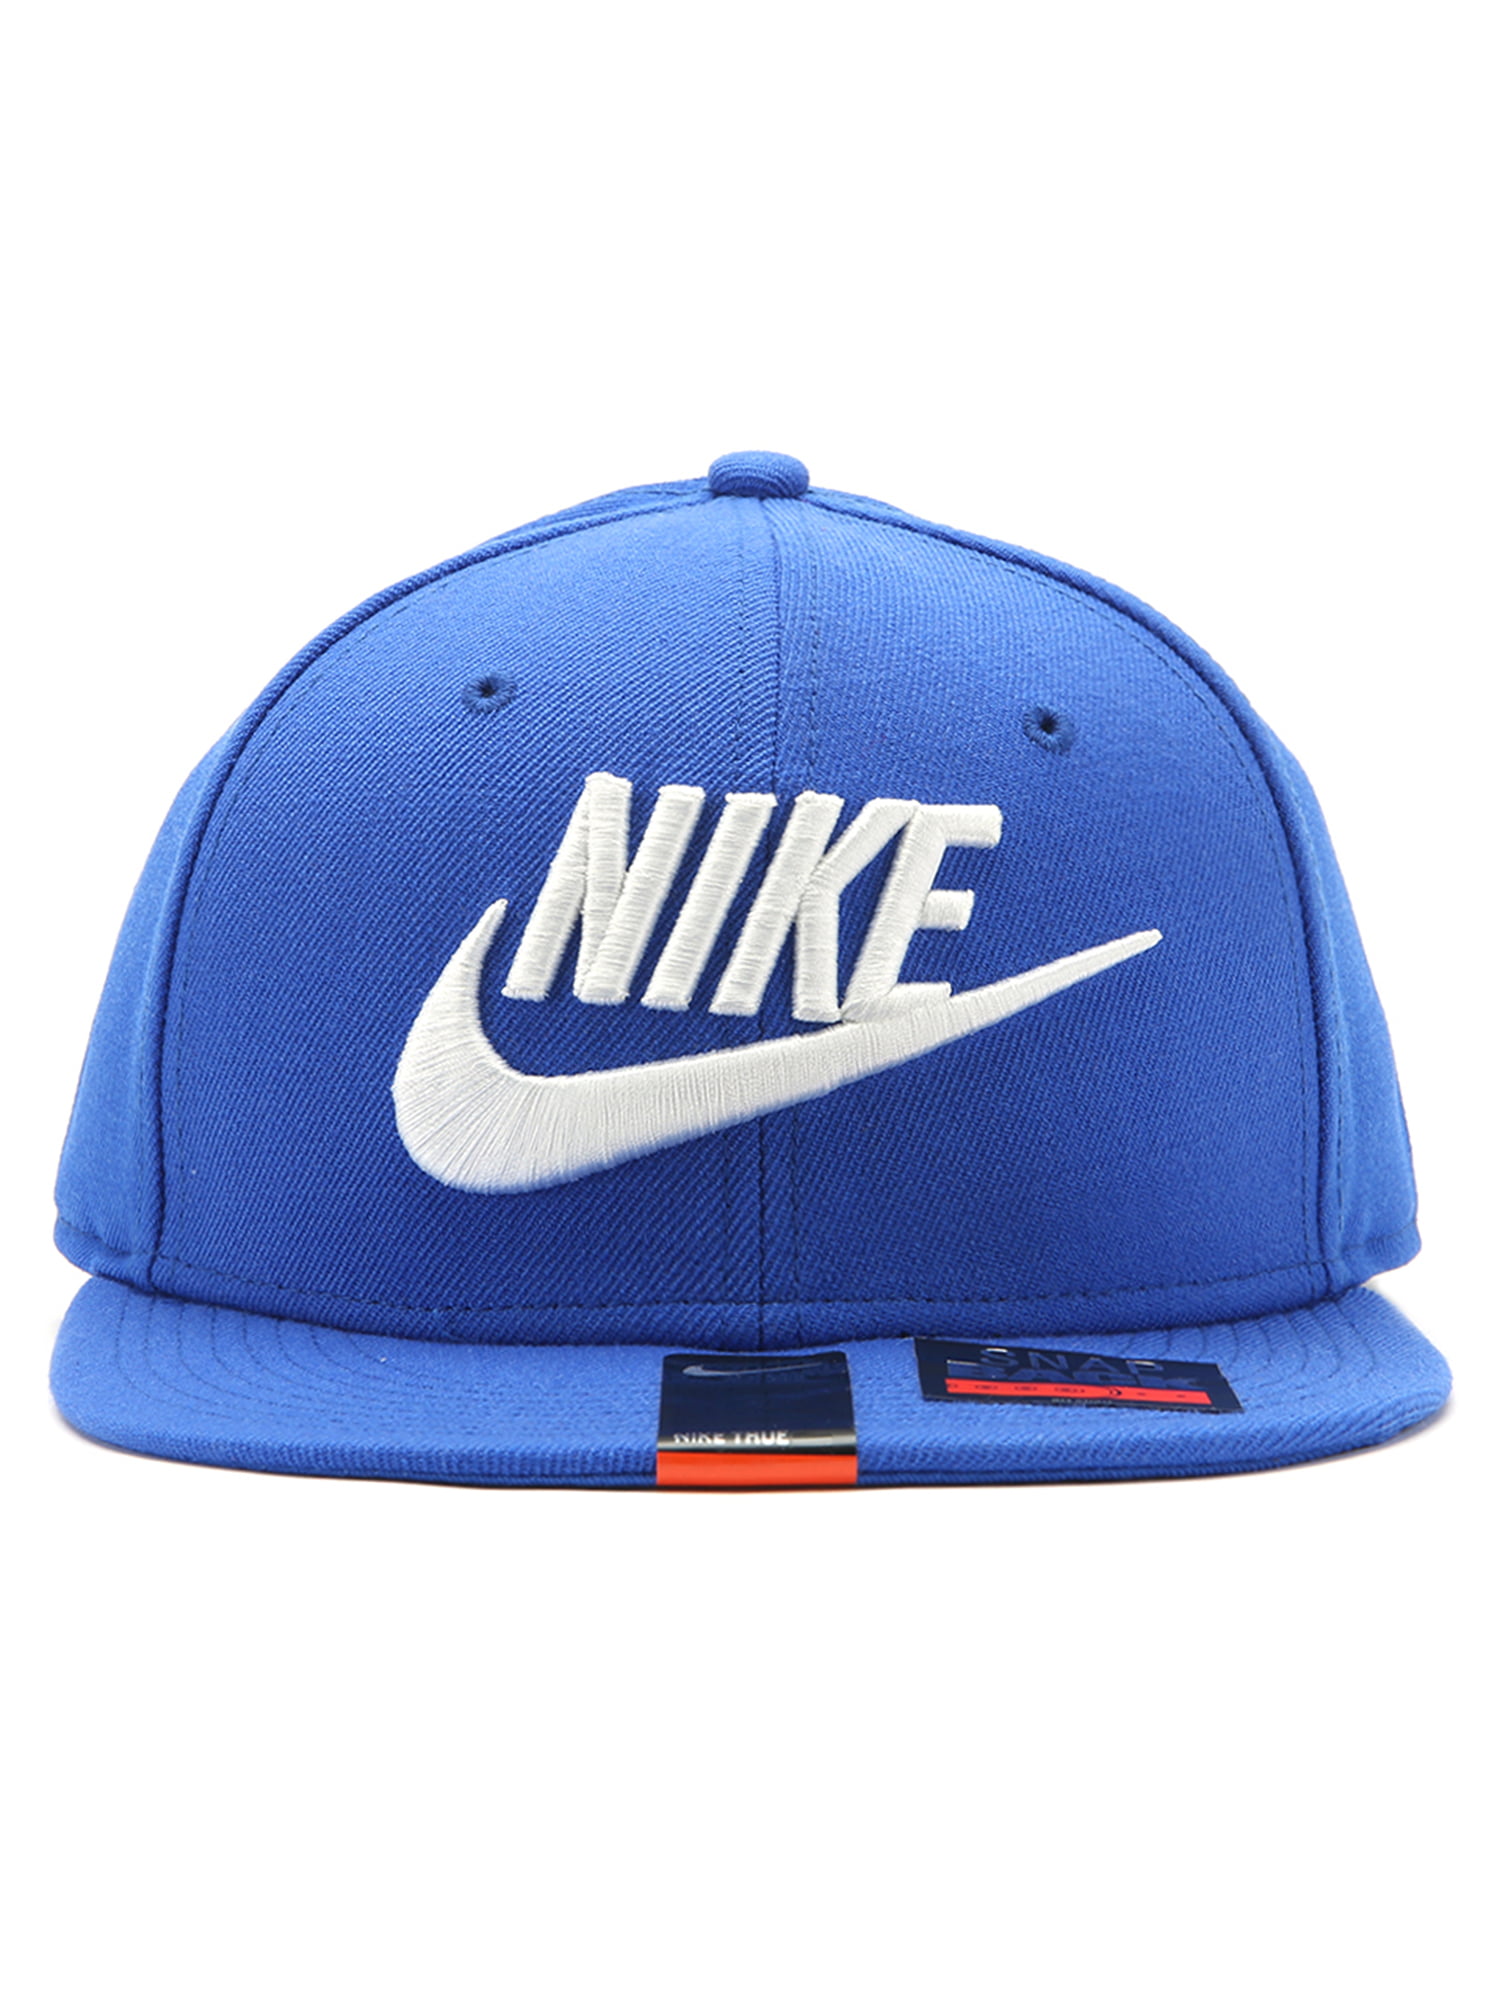 Nike Futura True 2 Snapback Hat 584169 Royal Blue/White